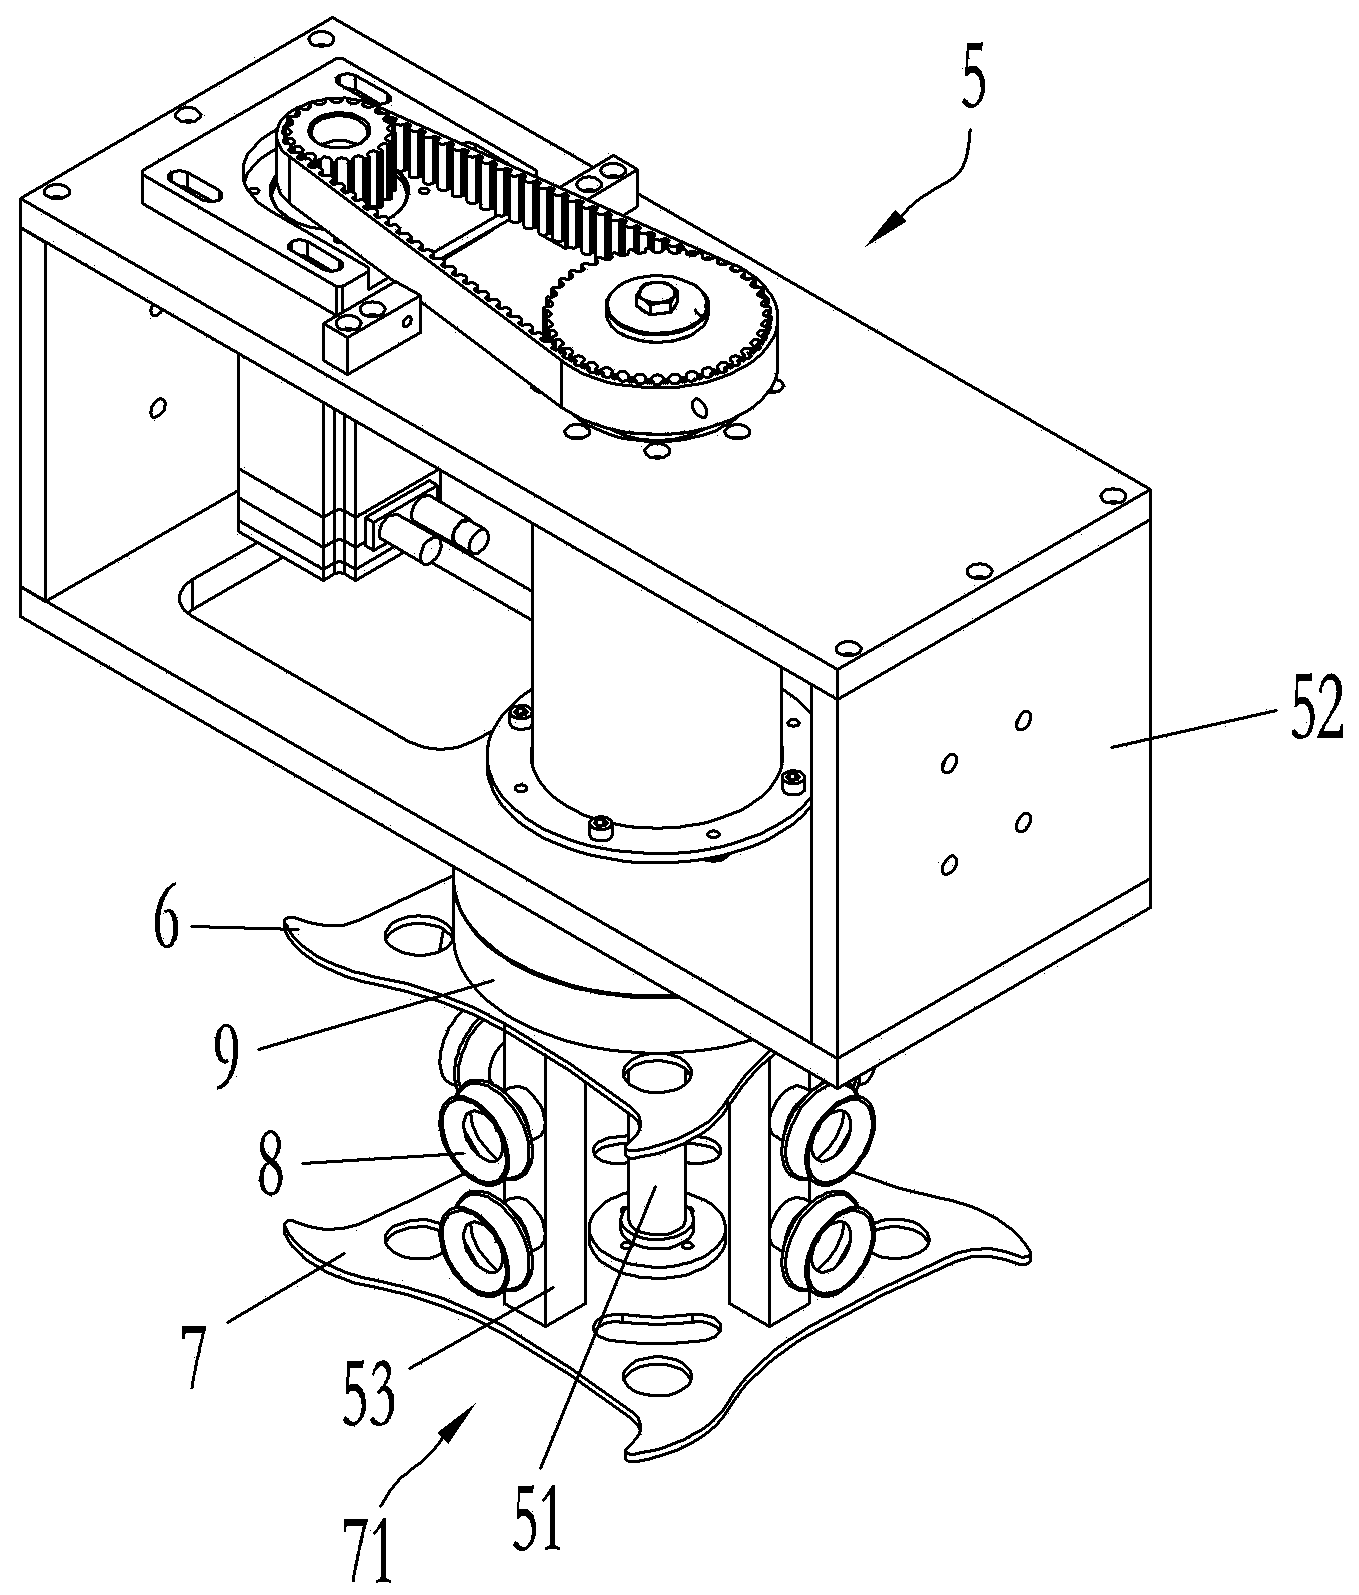 Bottle steering mechanism